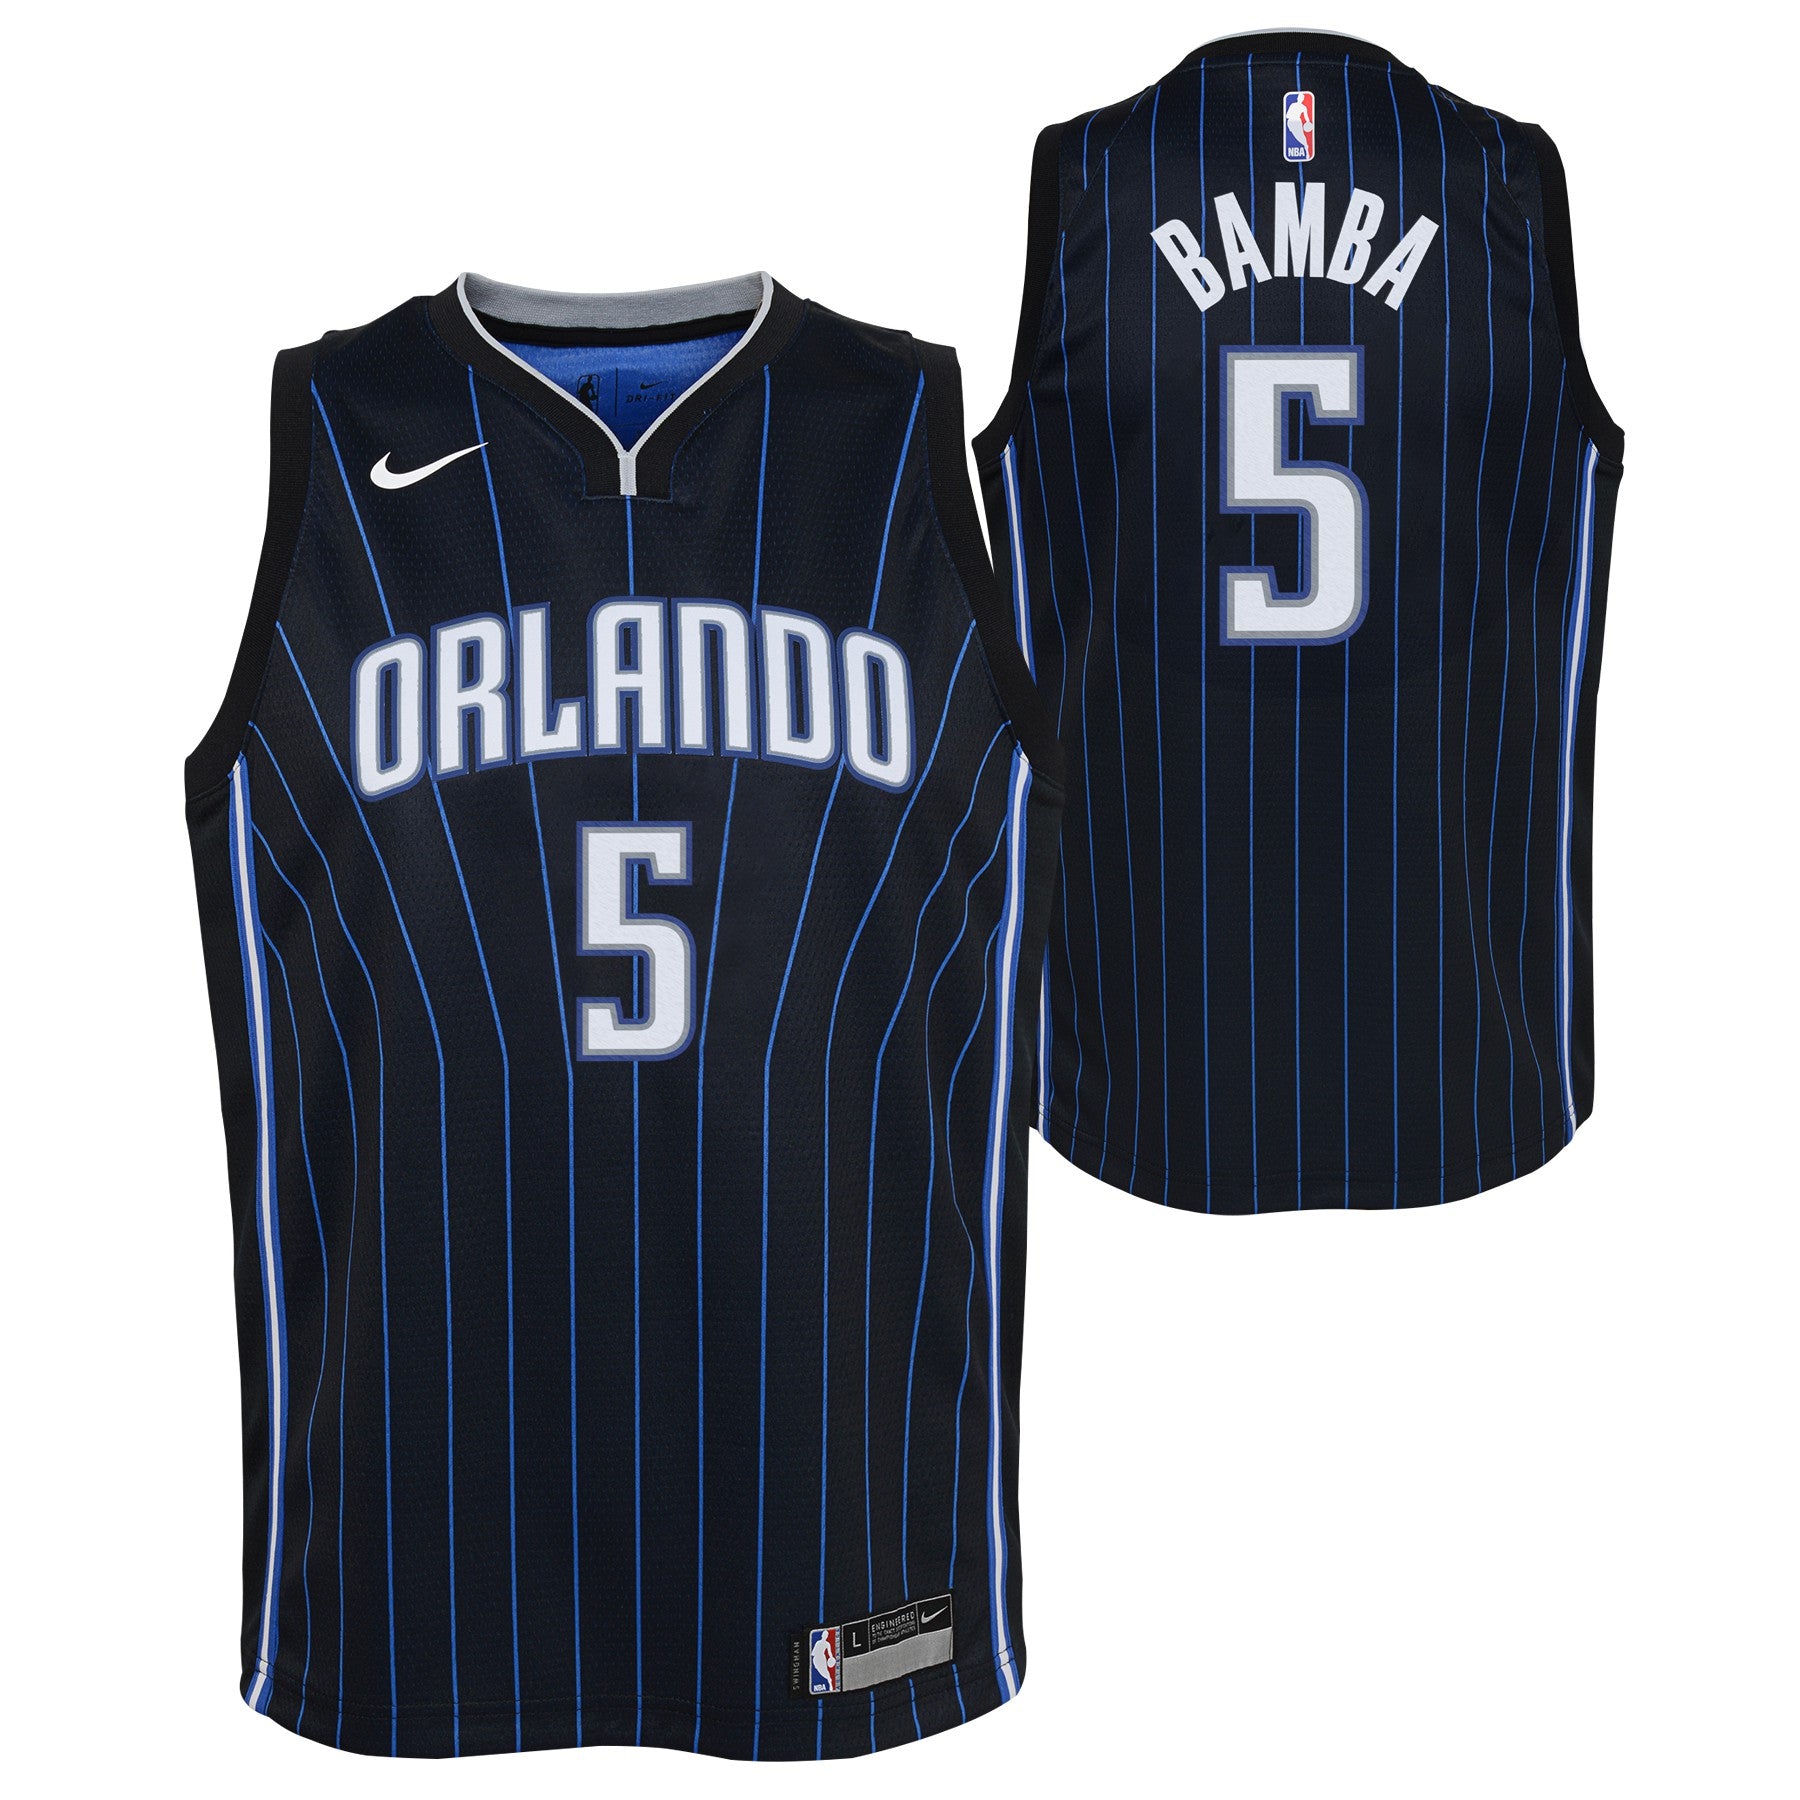 Vintage ADIDAS NBA Orlando Magic Basketball Jersey Blue Large